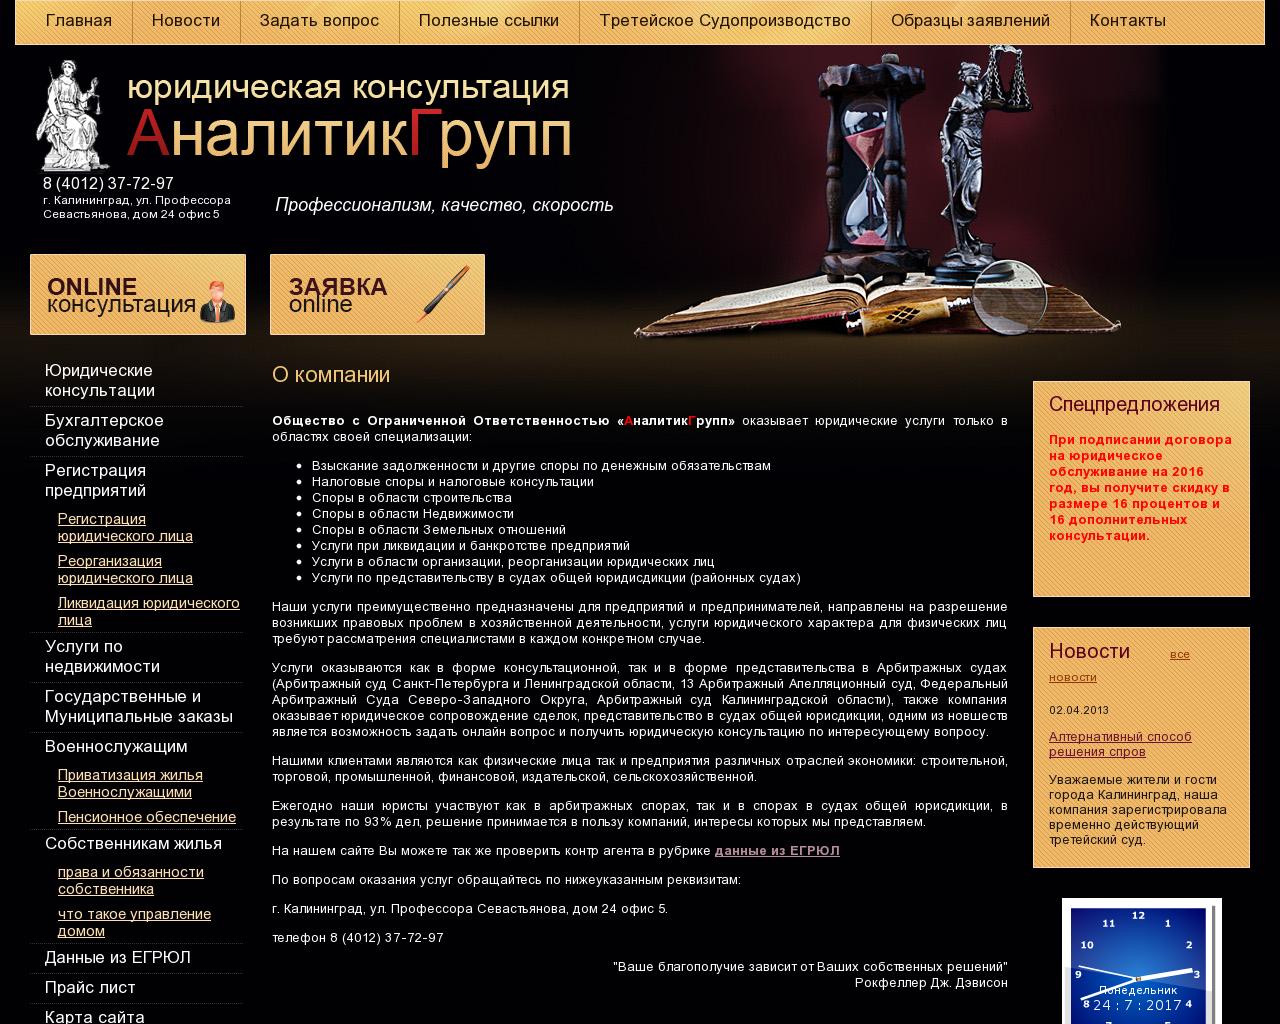 Изображение сайта analitikgroup.ru в разрешении 1280x1024